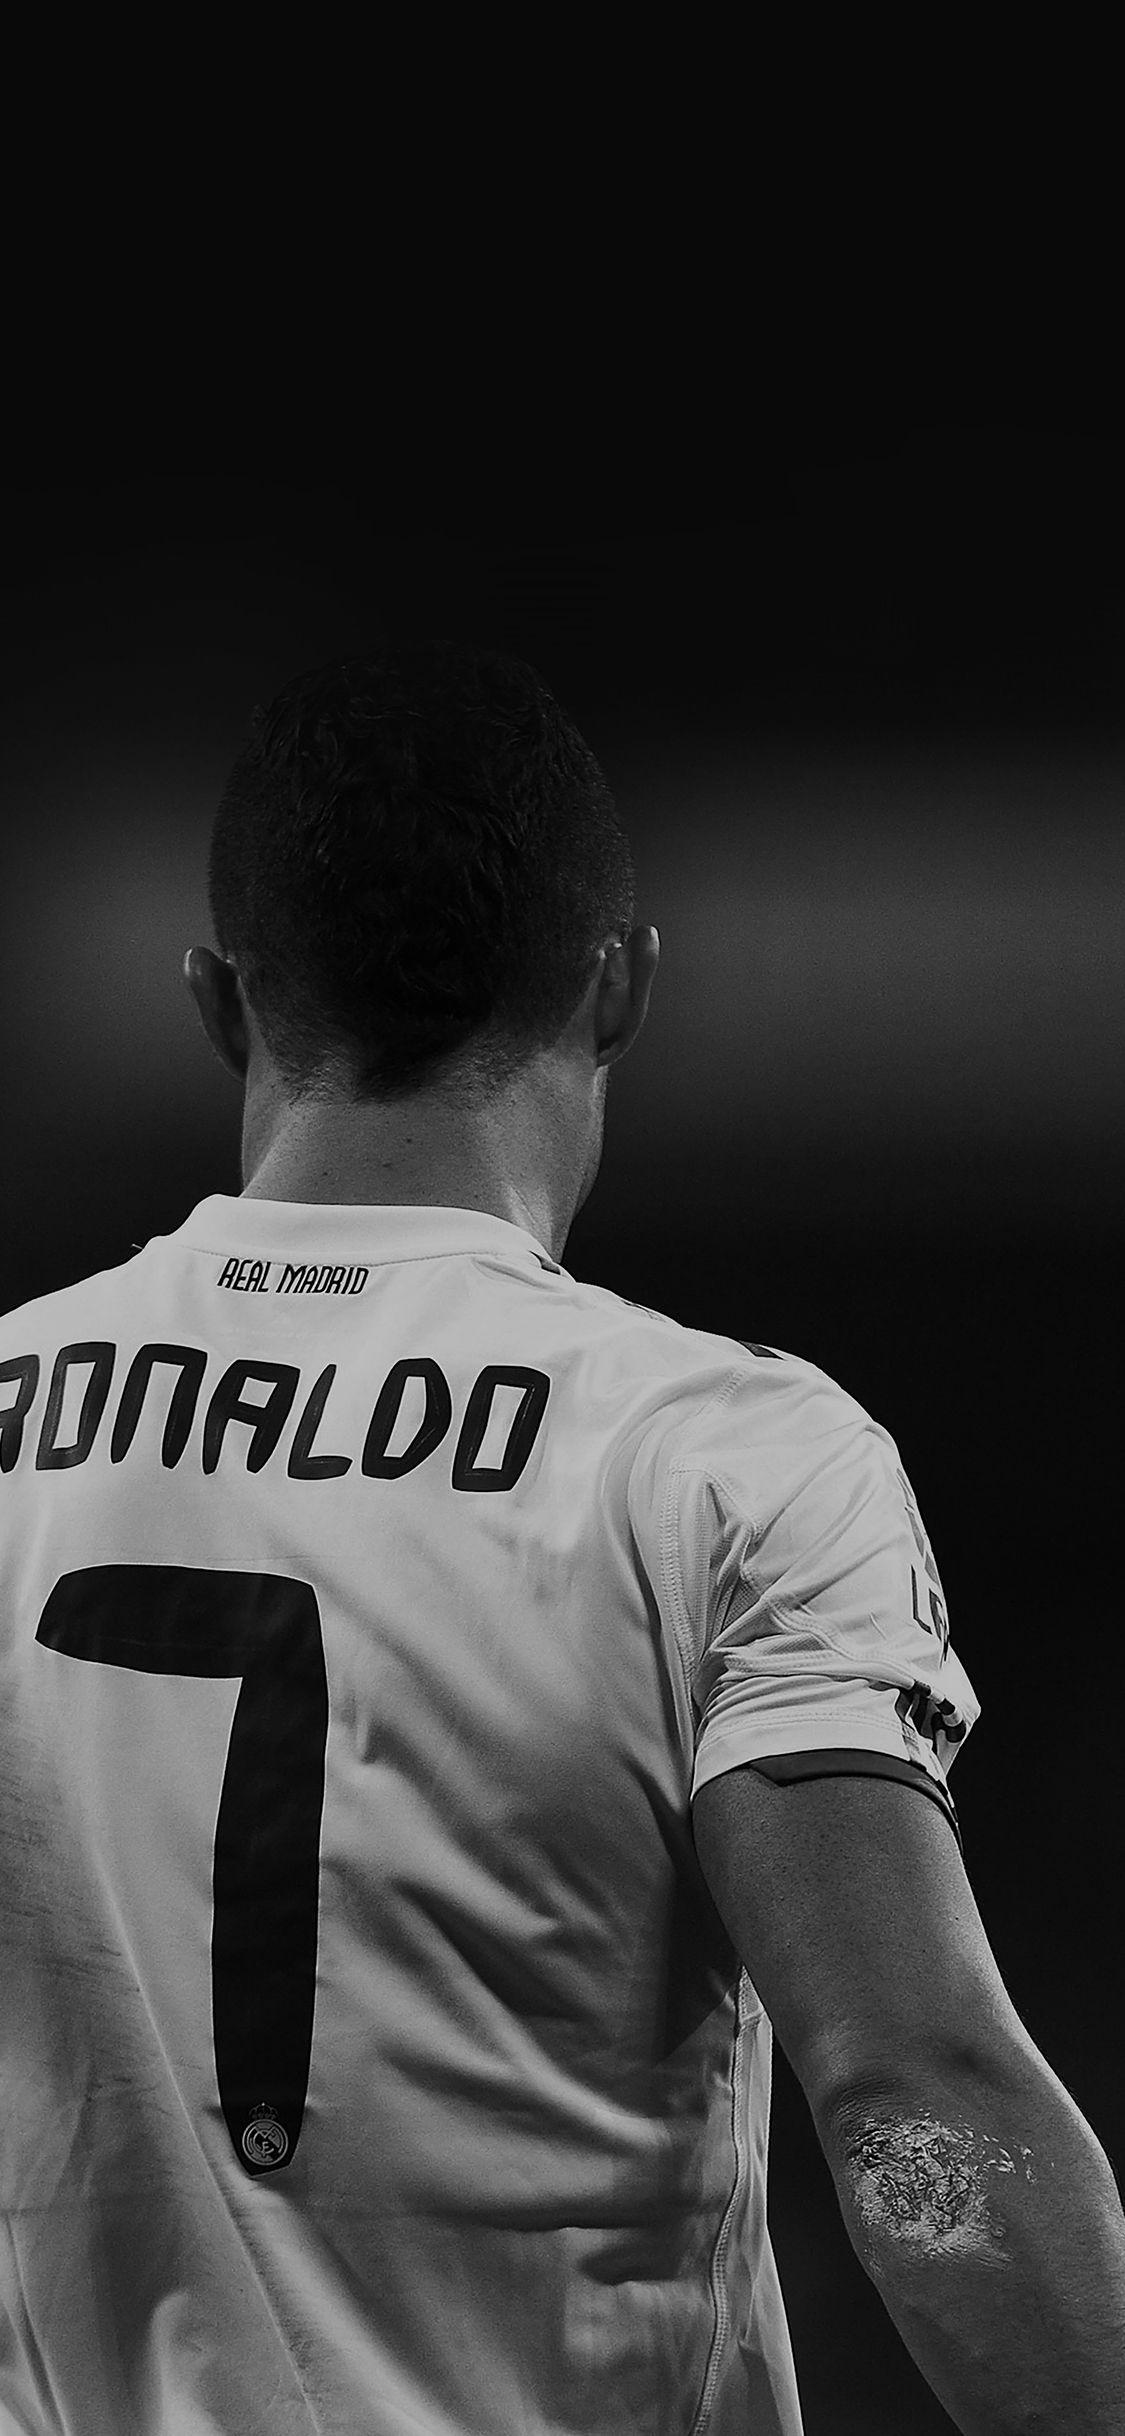 iPhoneX wallpaper: cristiano ronaldo 7 real madrid soccer dark. Ronaldo wallpaper, Ronaldo 7 real madrid, Ronaldo